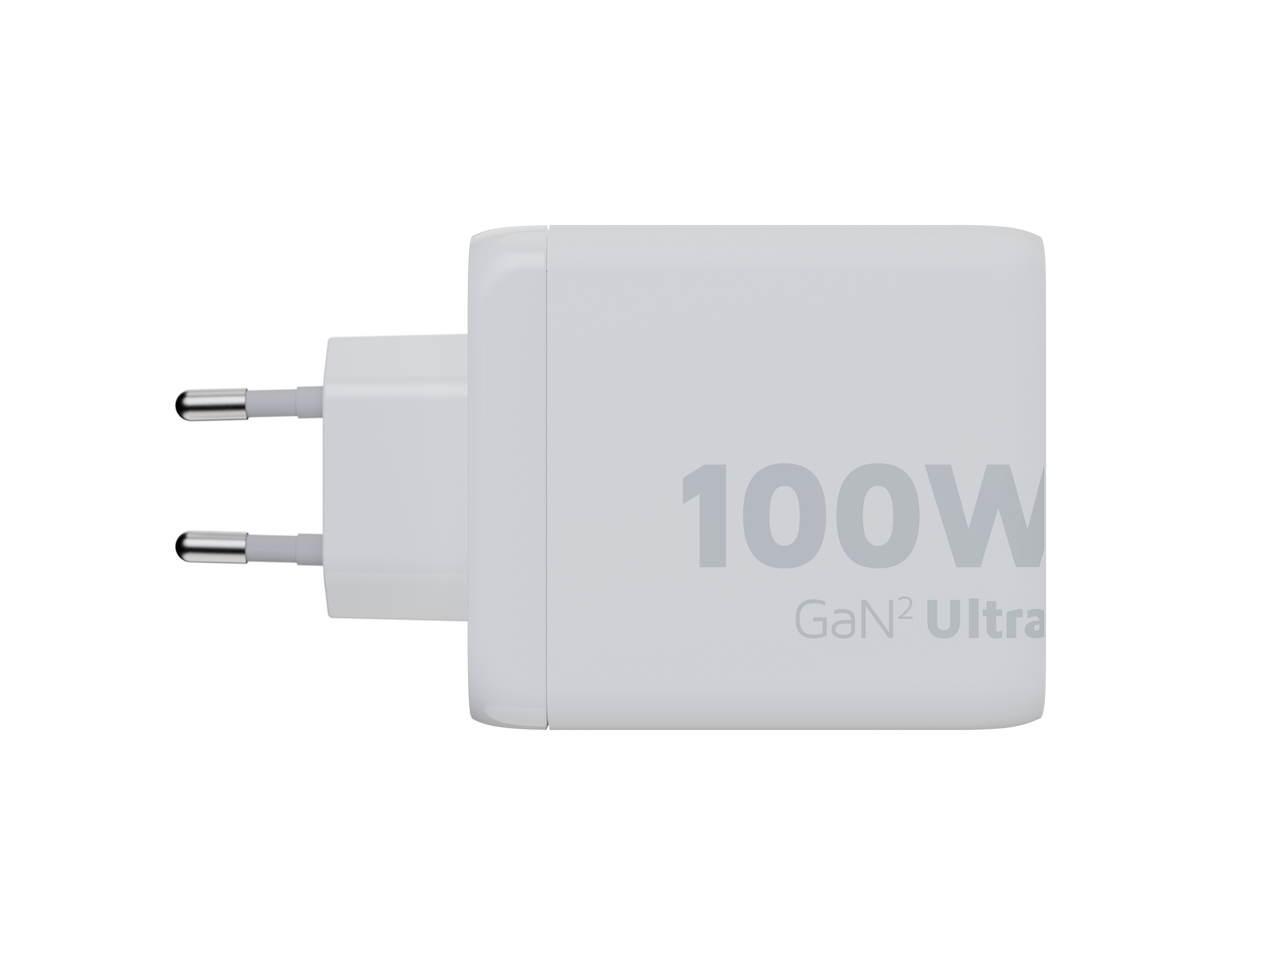 Chargeur Ultra 100W GaN2